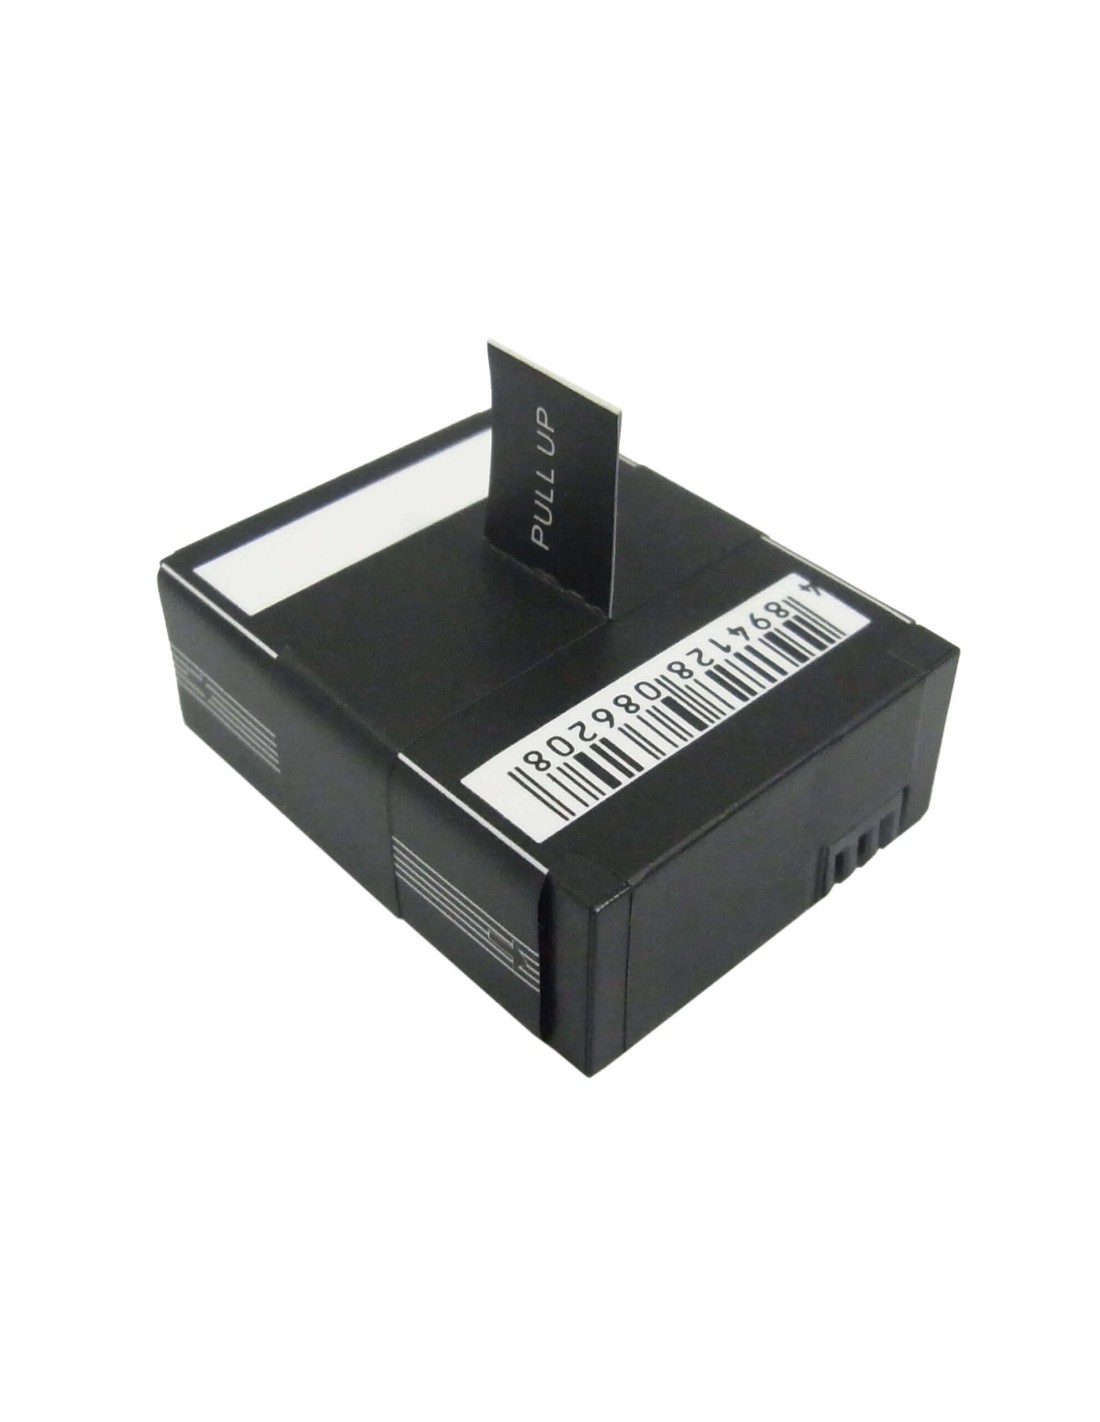 Battery for Gopro Hd Hero3 Black Edition, 3.7V, 1180mAh - 4.37Wh